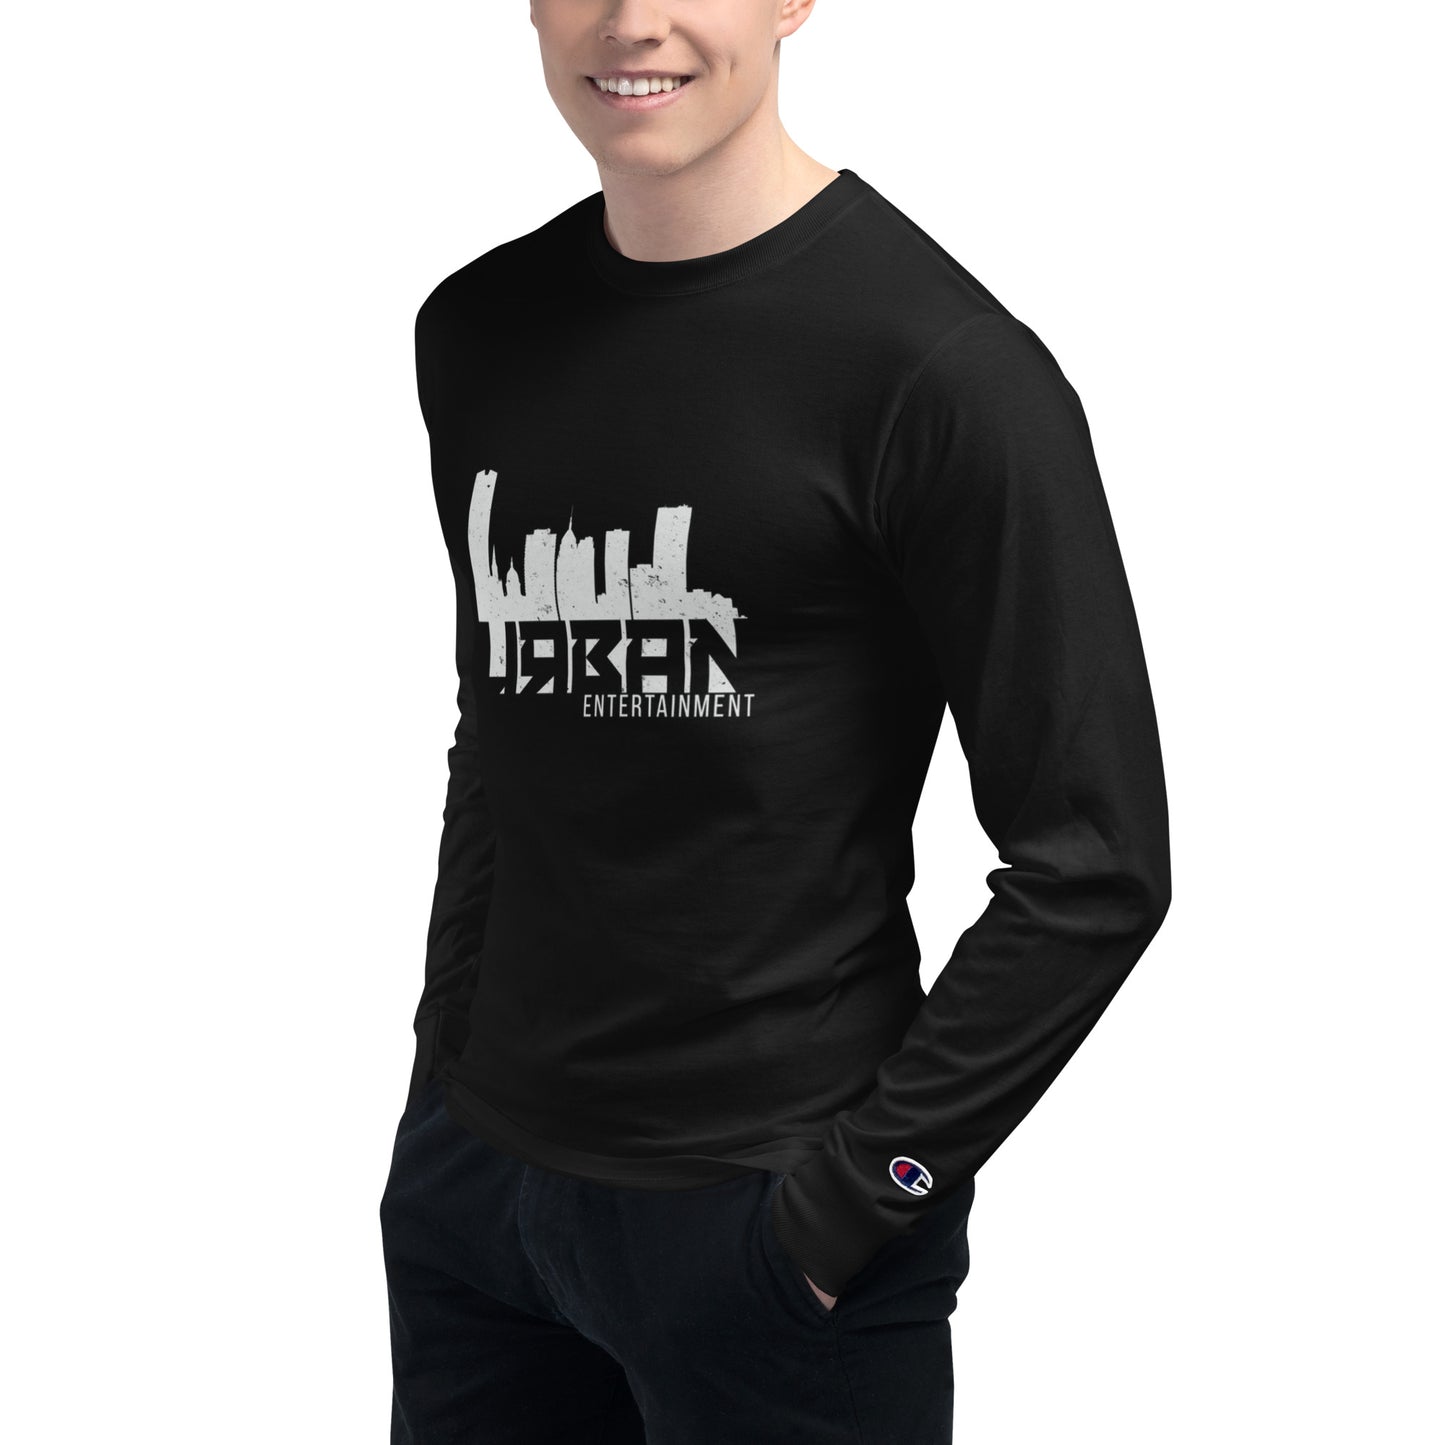 Urban Entertainment Champion Brand Long Sleeve Shirt